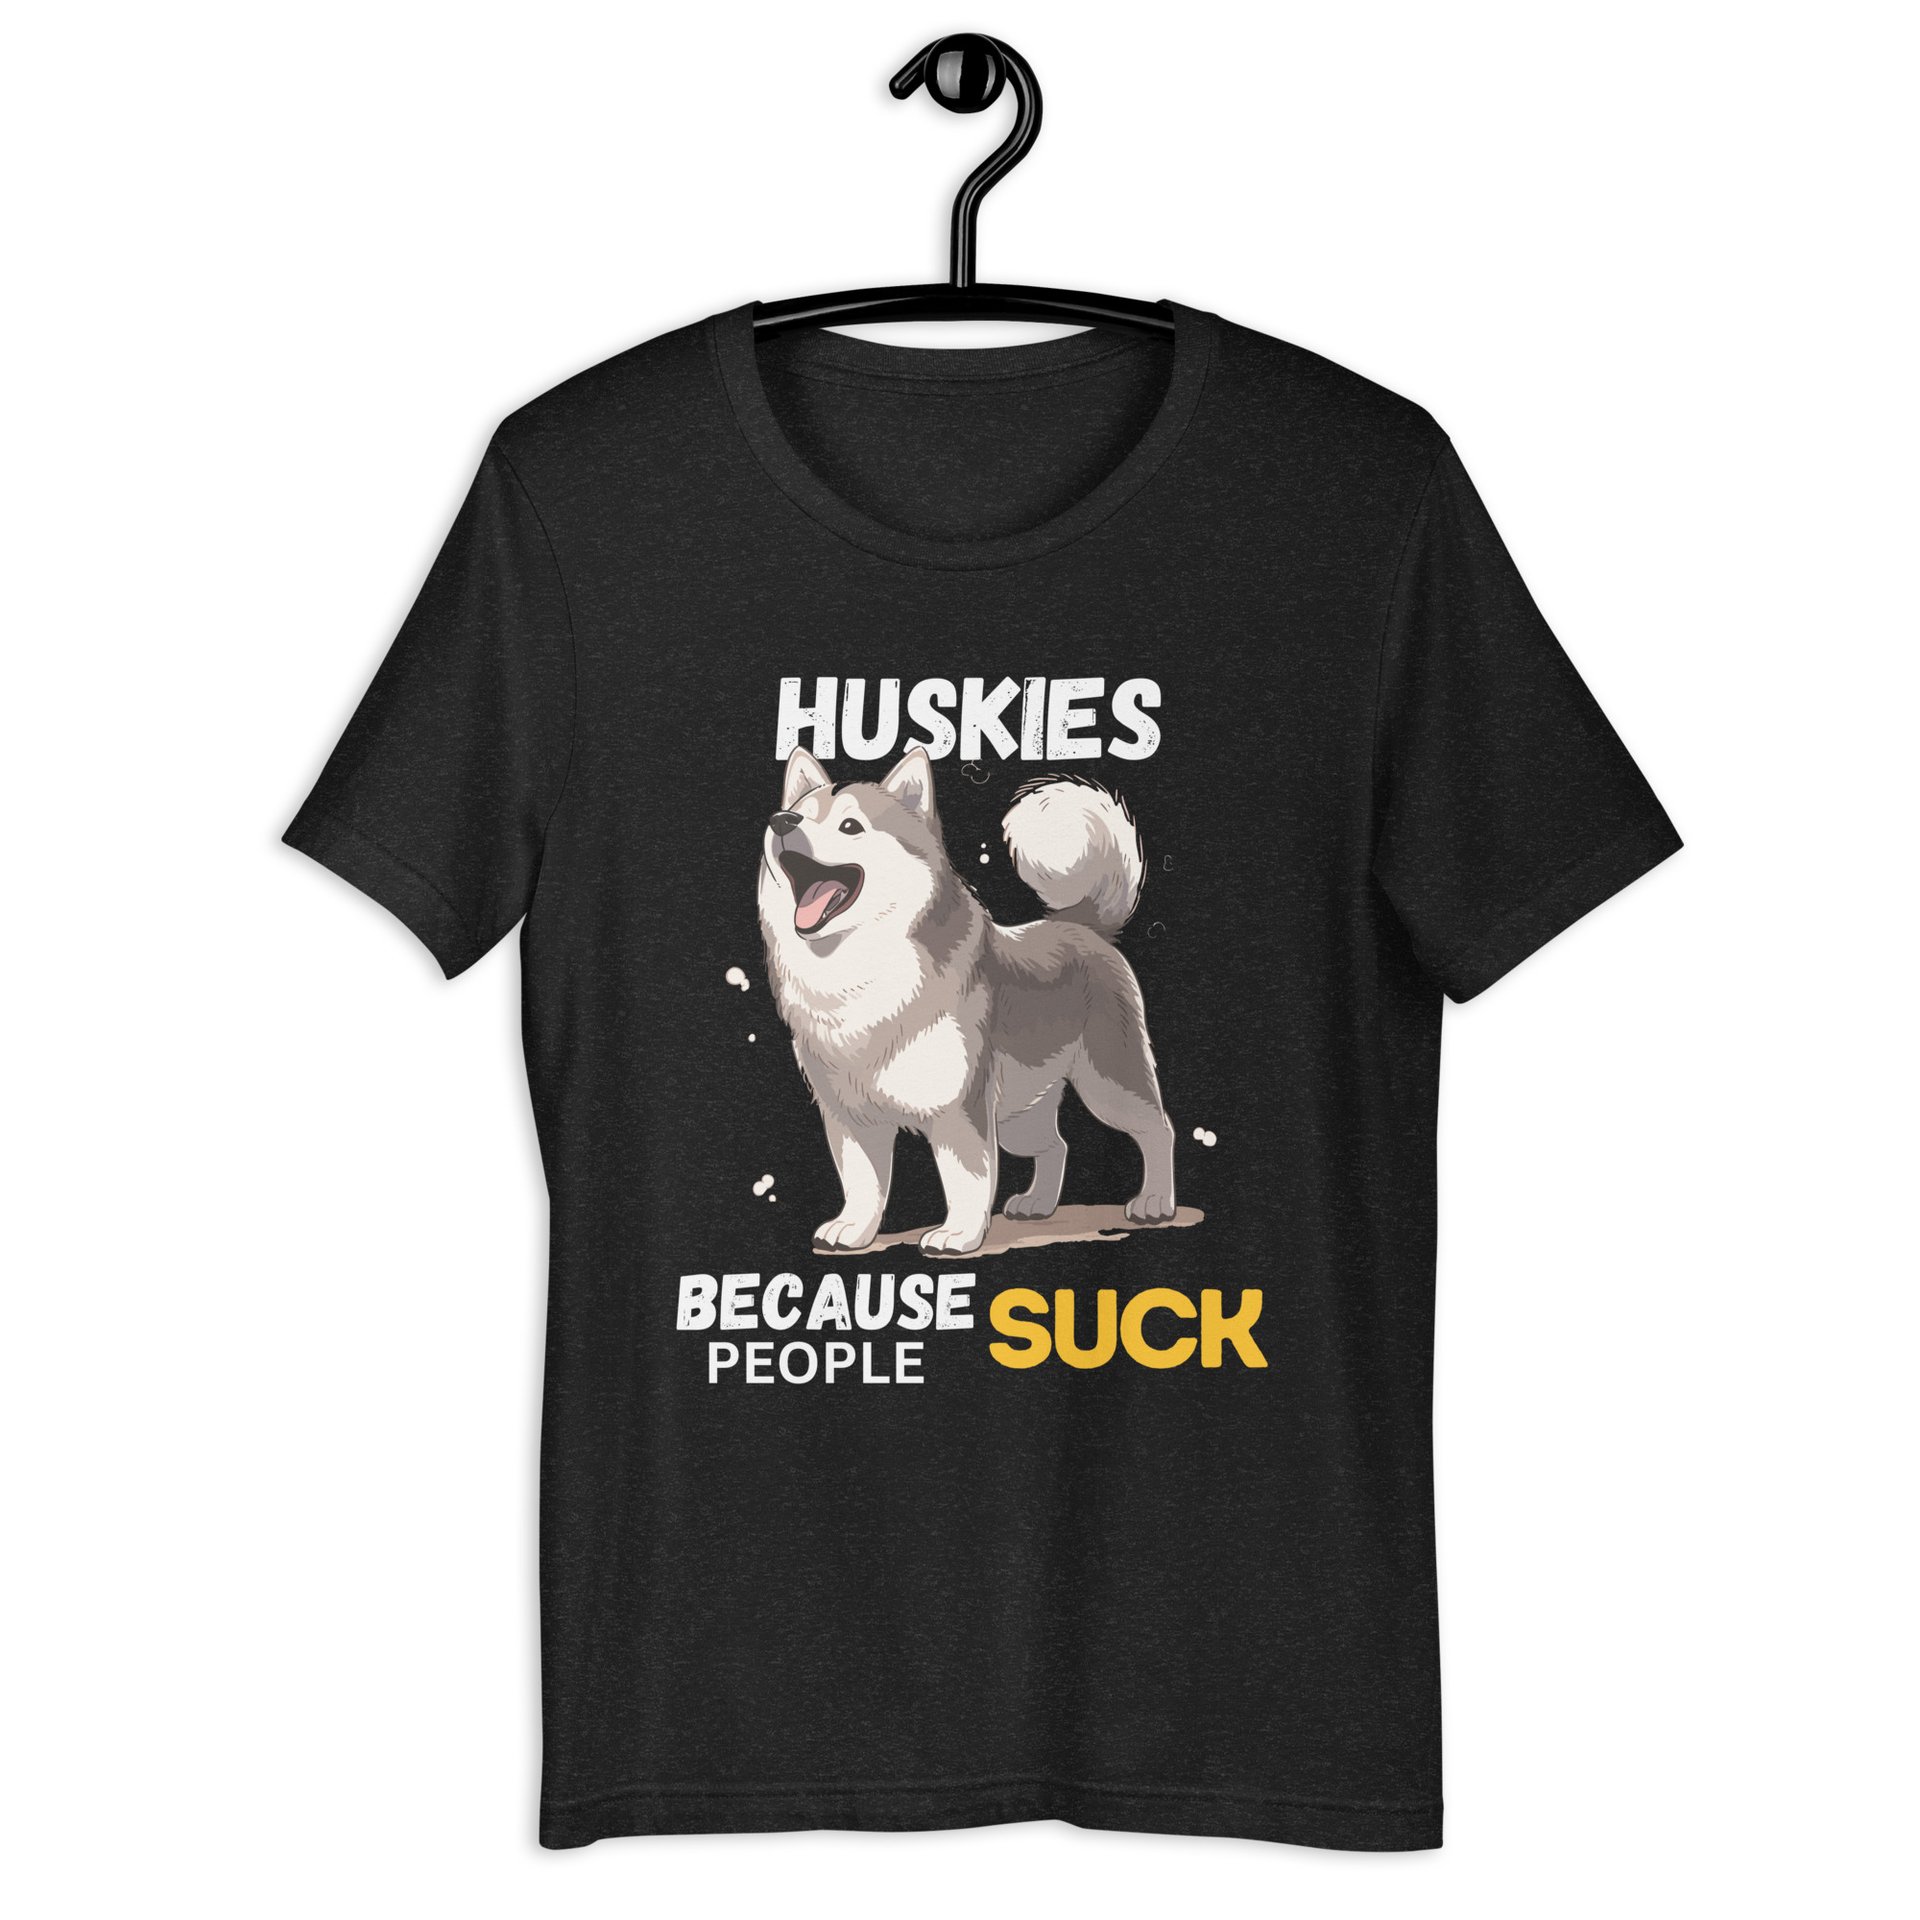 Huskies Because People Suck Unisex T-Shirt black